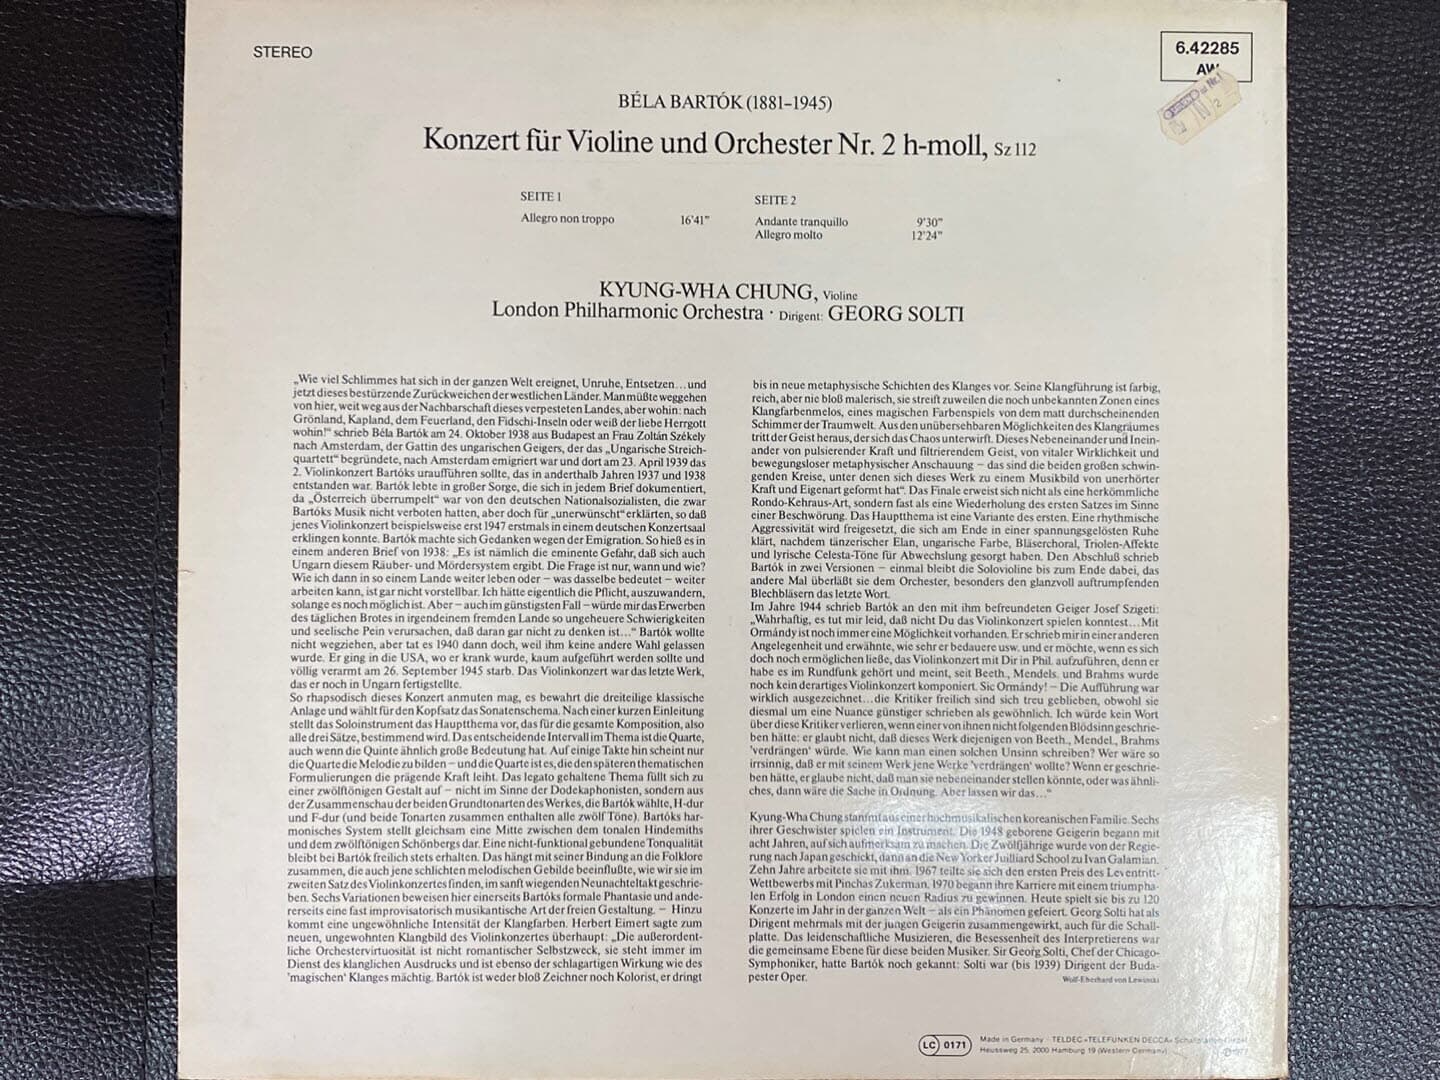 [LP] 정경화,게오르그 솔티 - Bartok Violin Concerto No.2 in B minor LP [독일반]